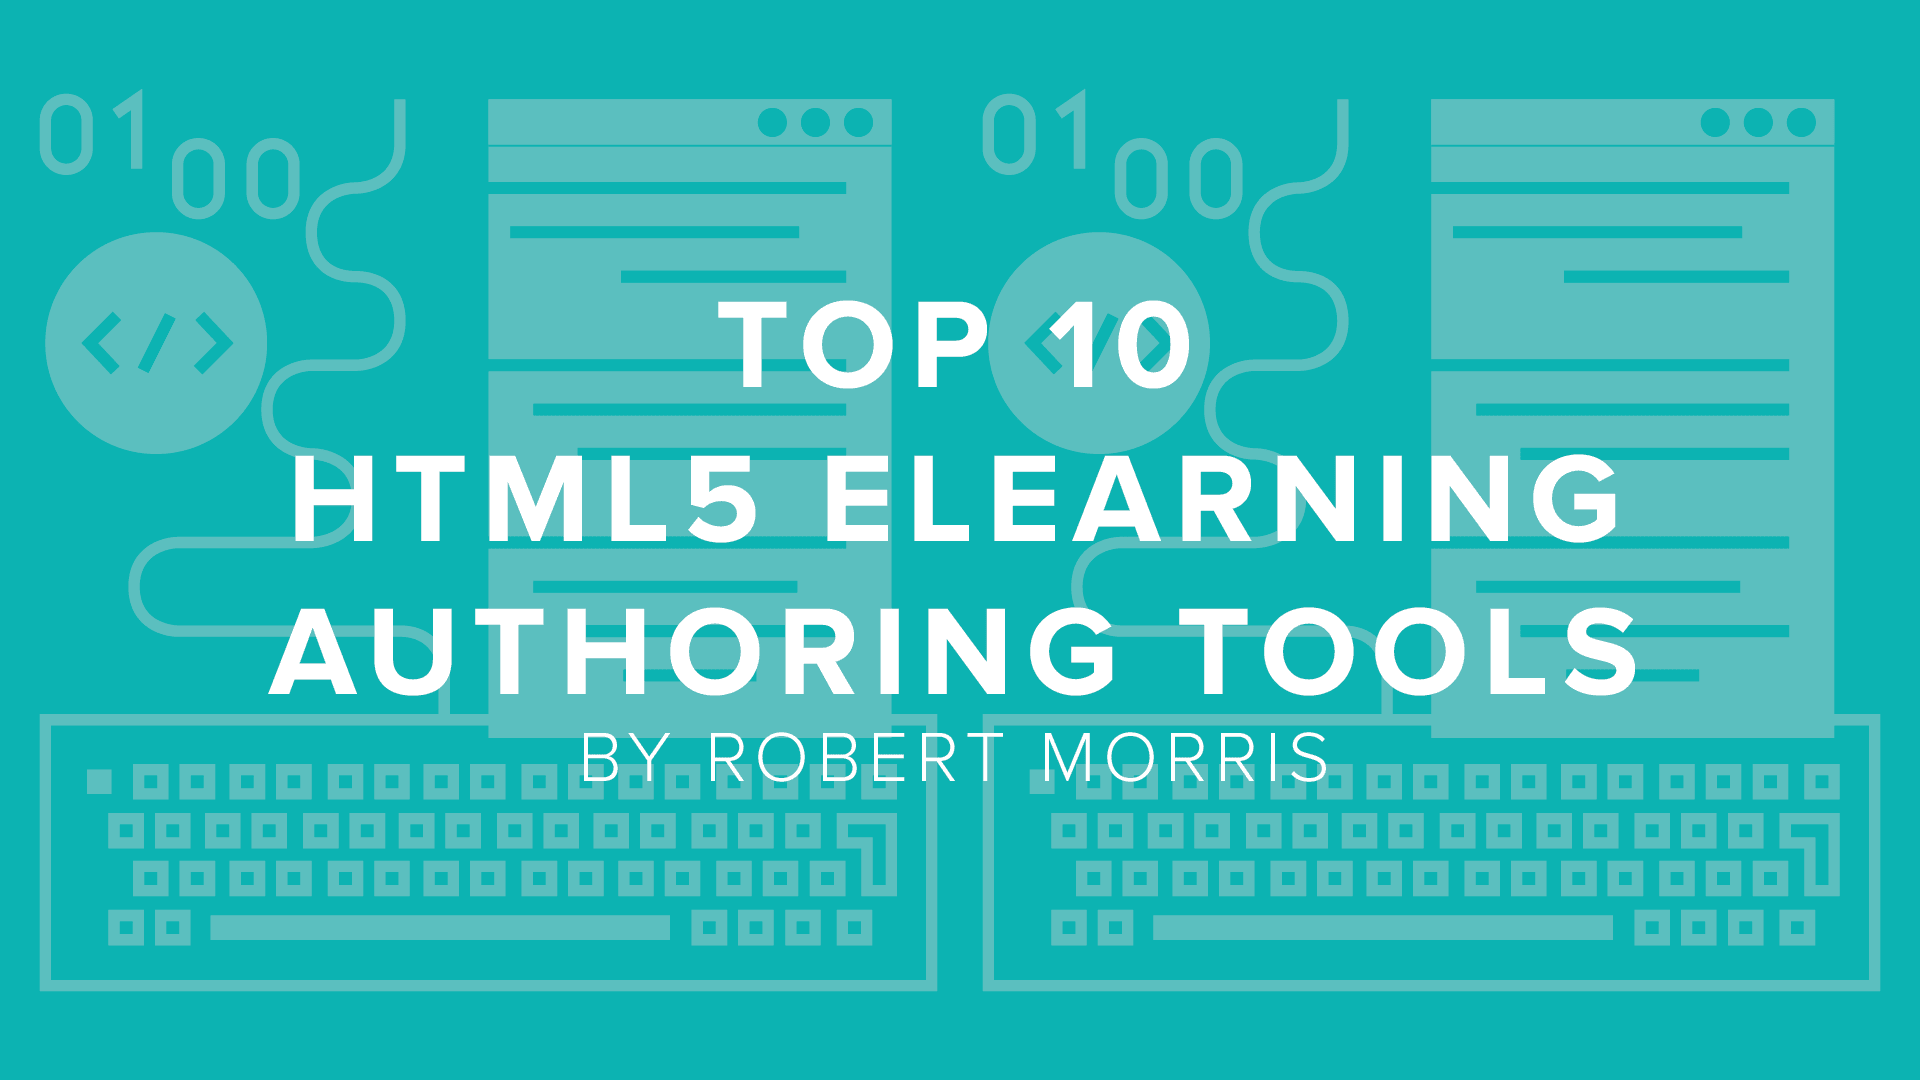 DigitalChalk: Top 10 HTML5 eLearning Authoring Tools by Robert Morris